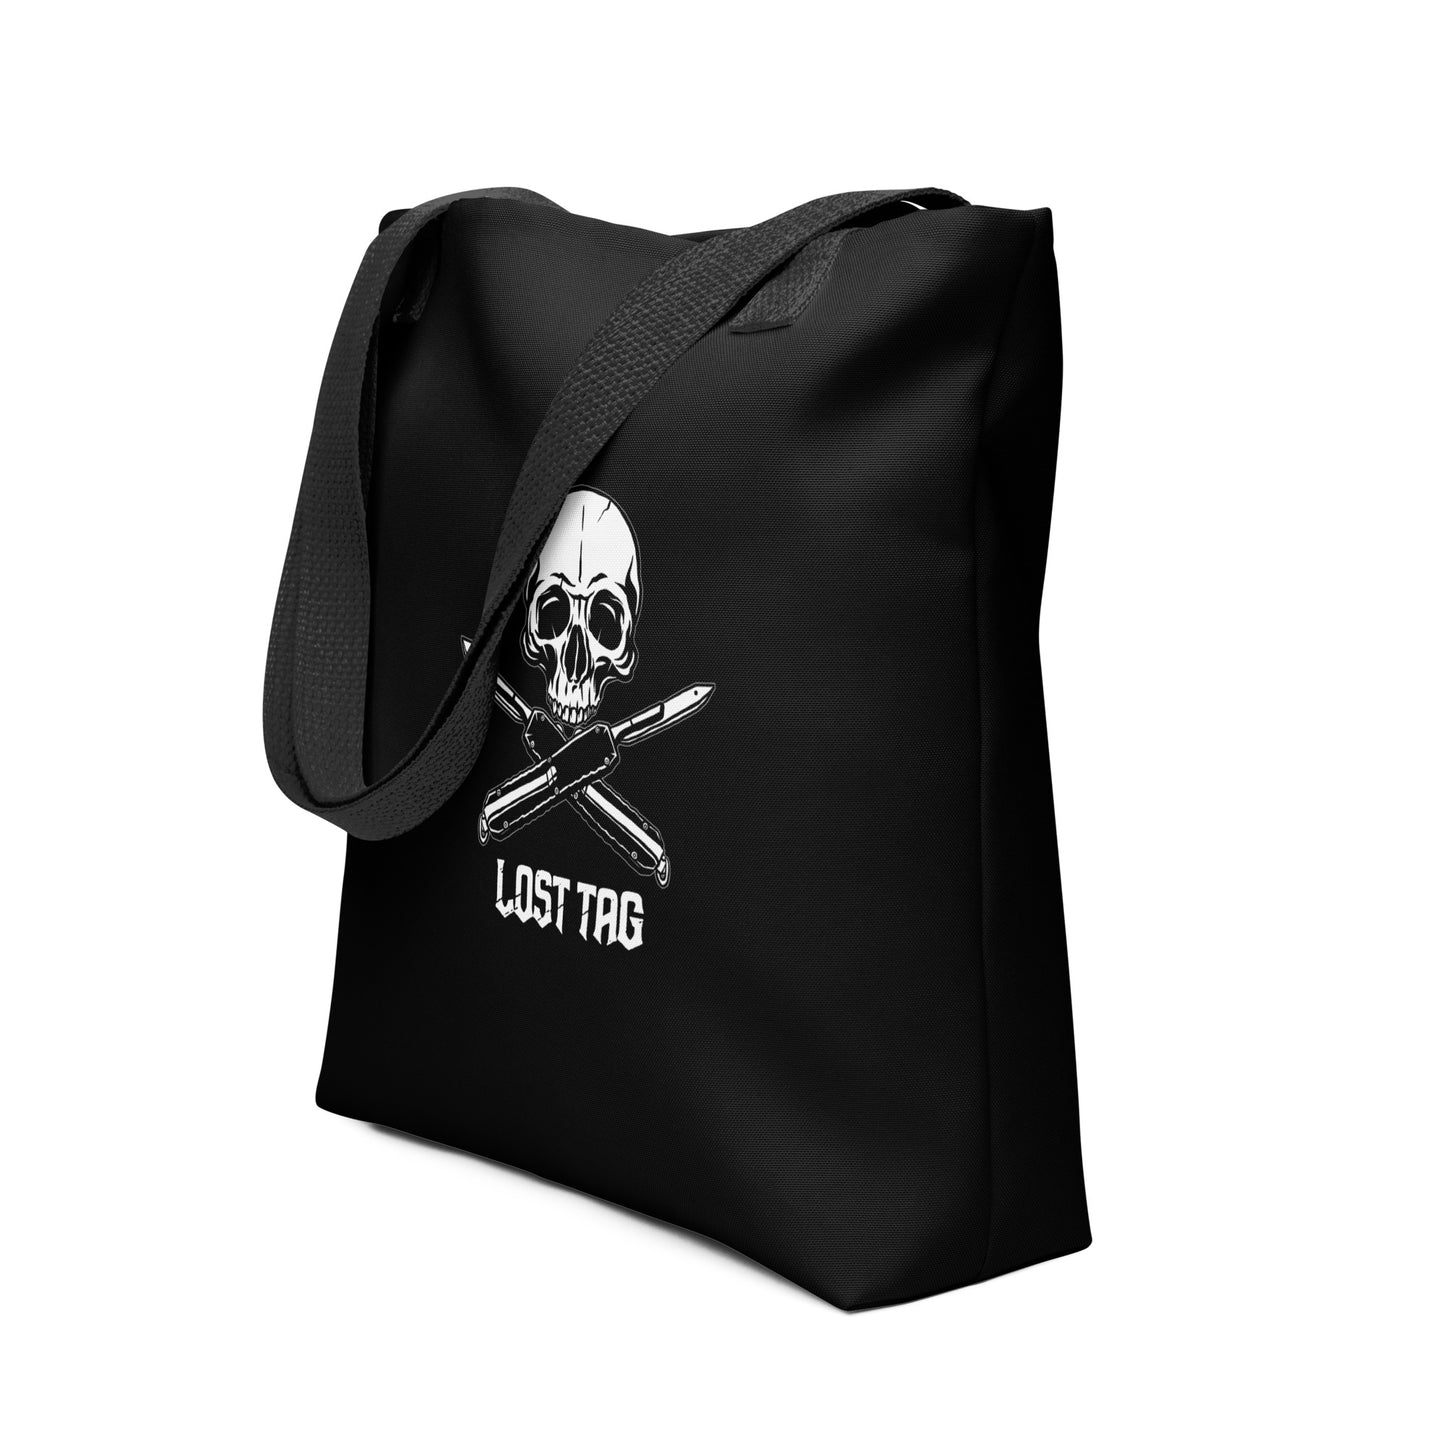 Lost Tag Branded Tote bag